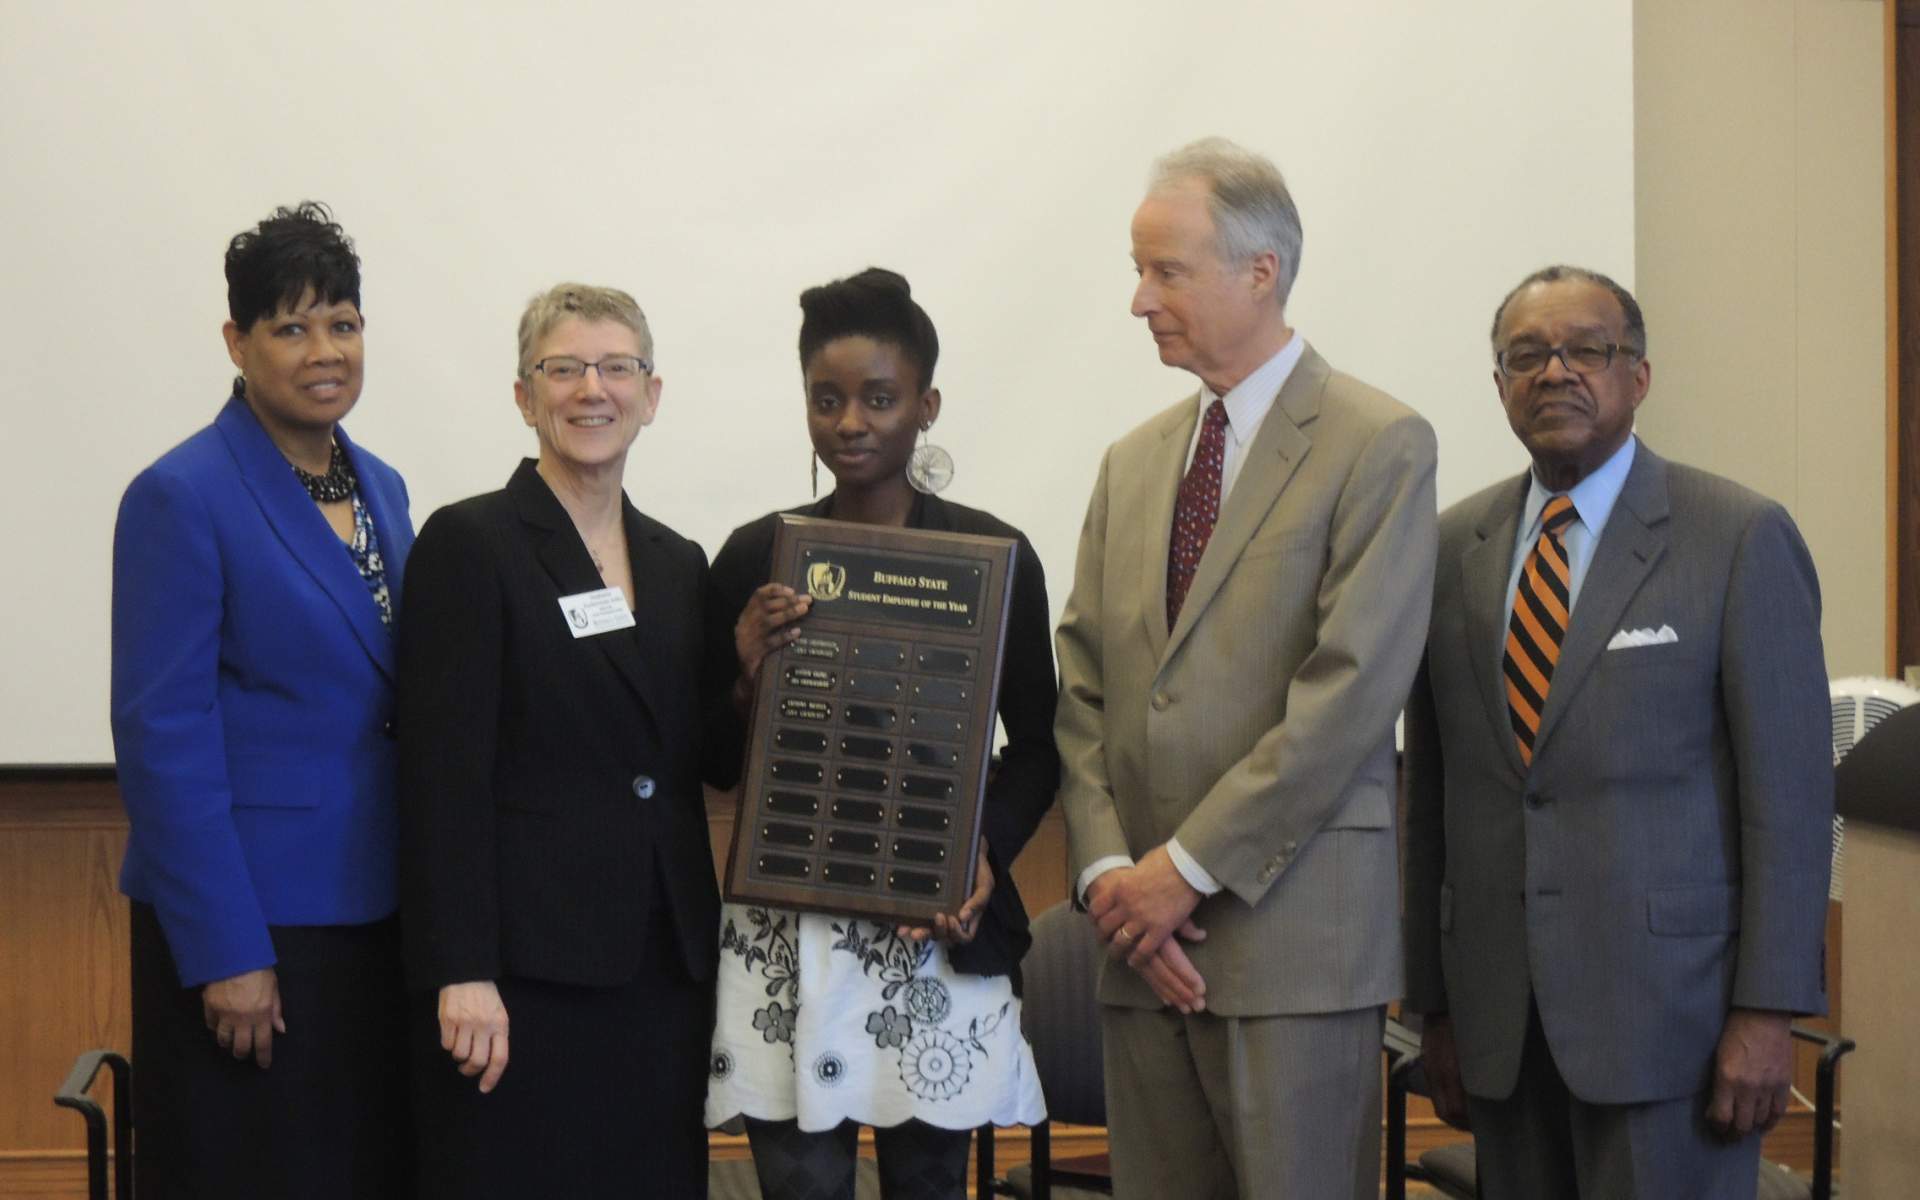 Esther Ekong awarded Undergraduate Student Employee of the Year